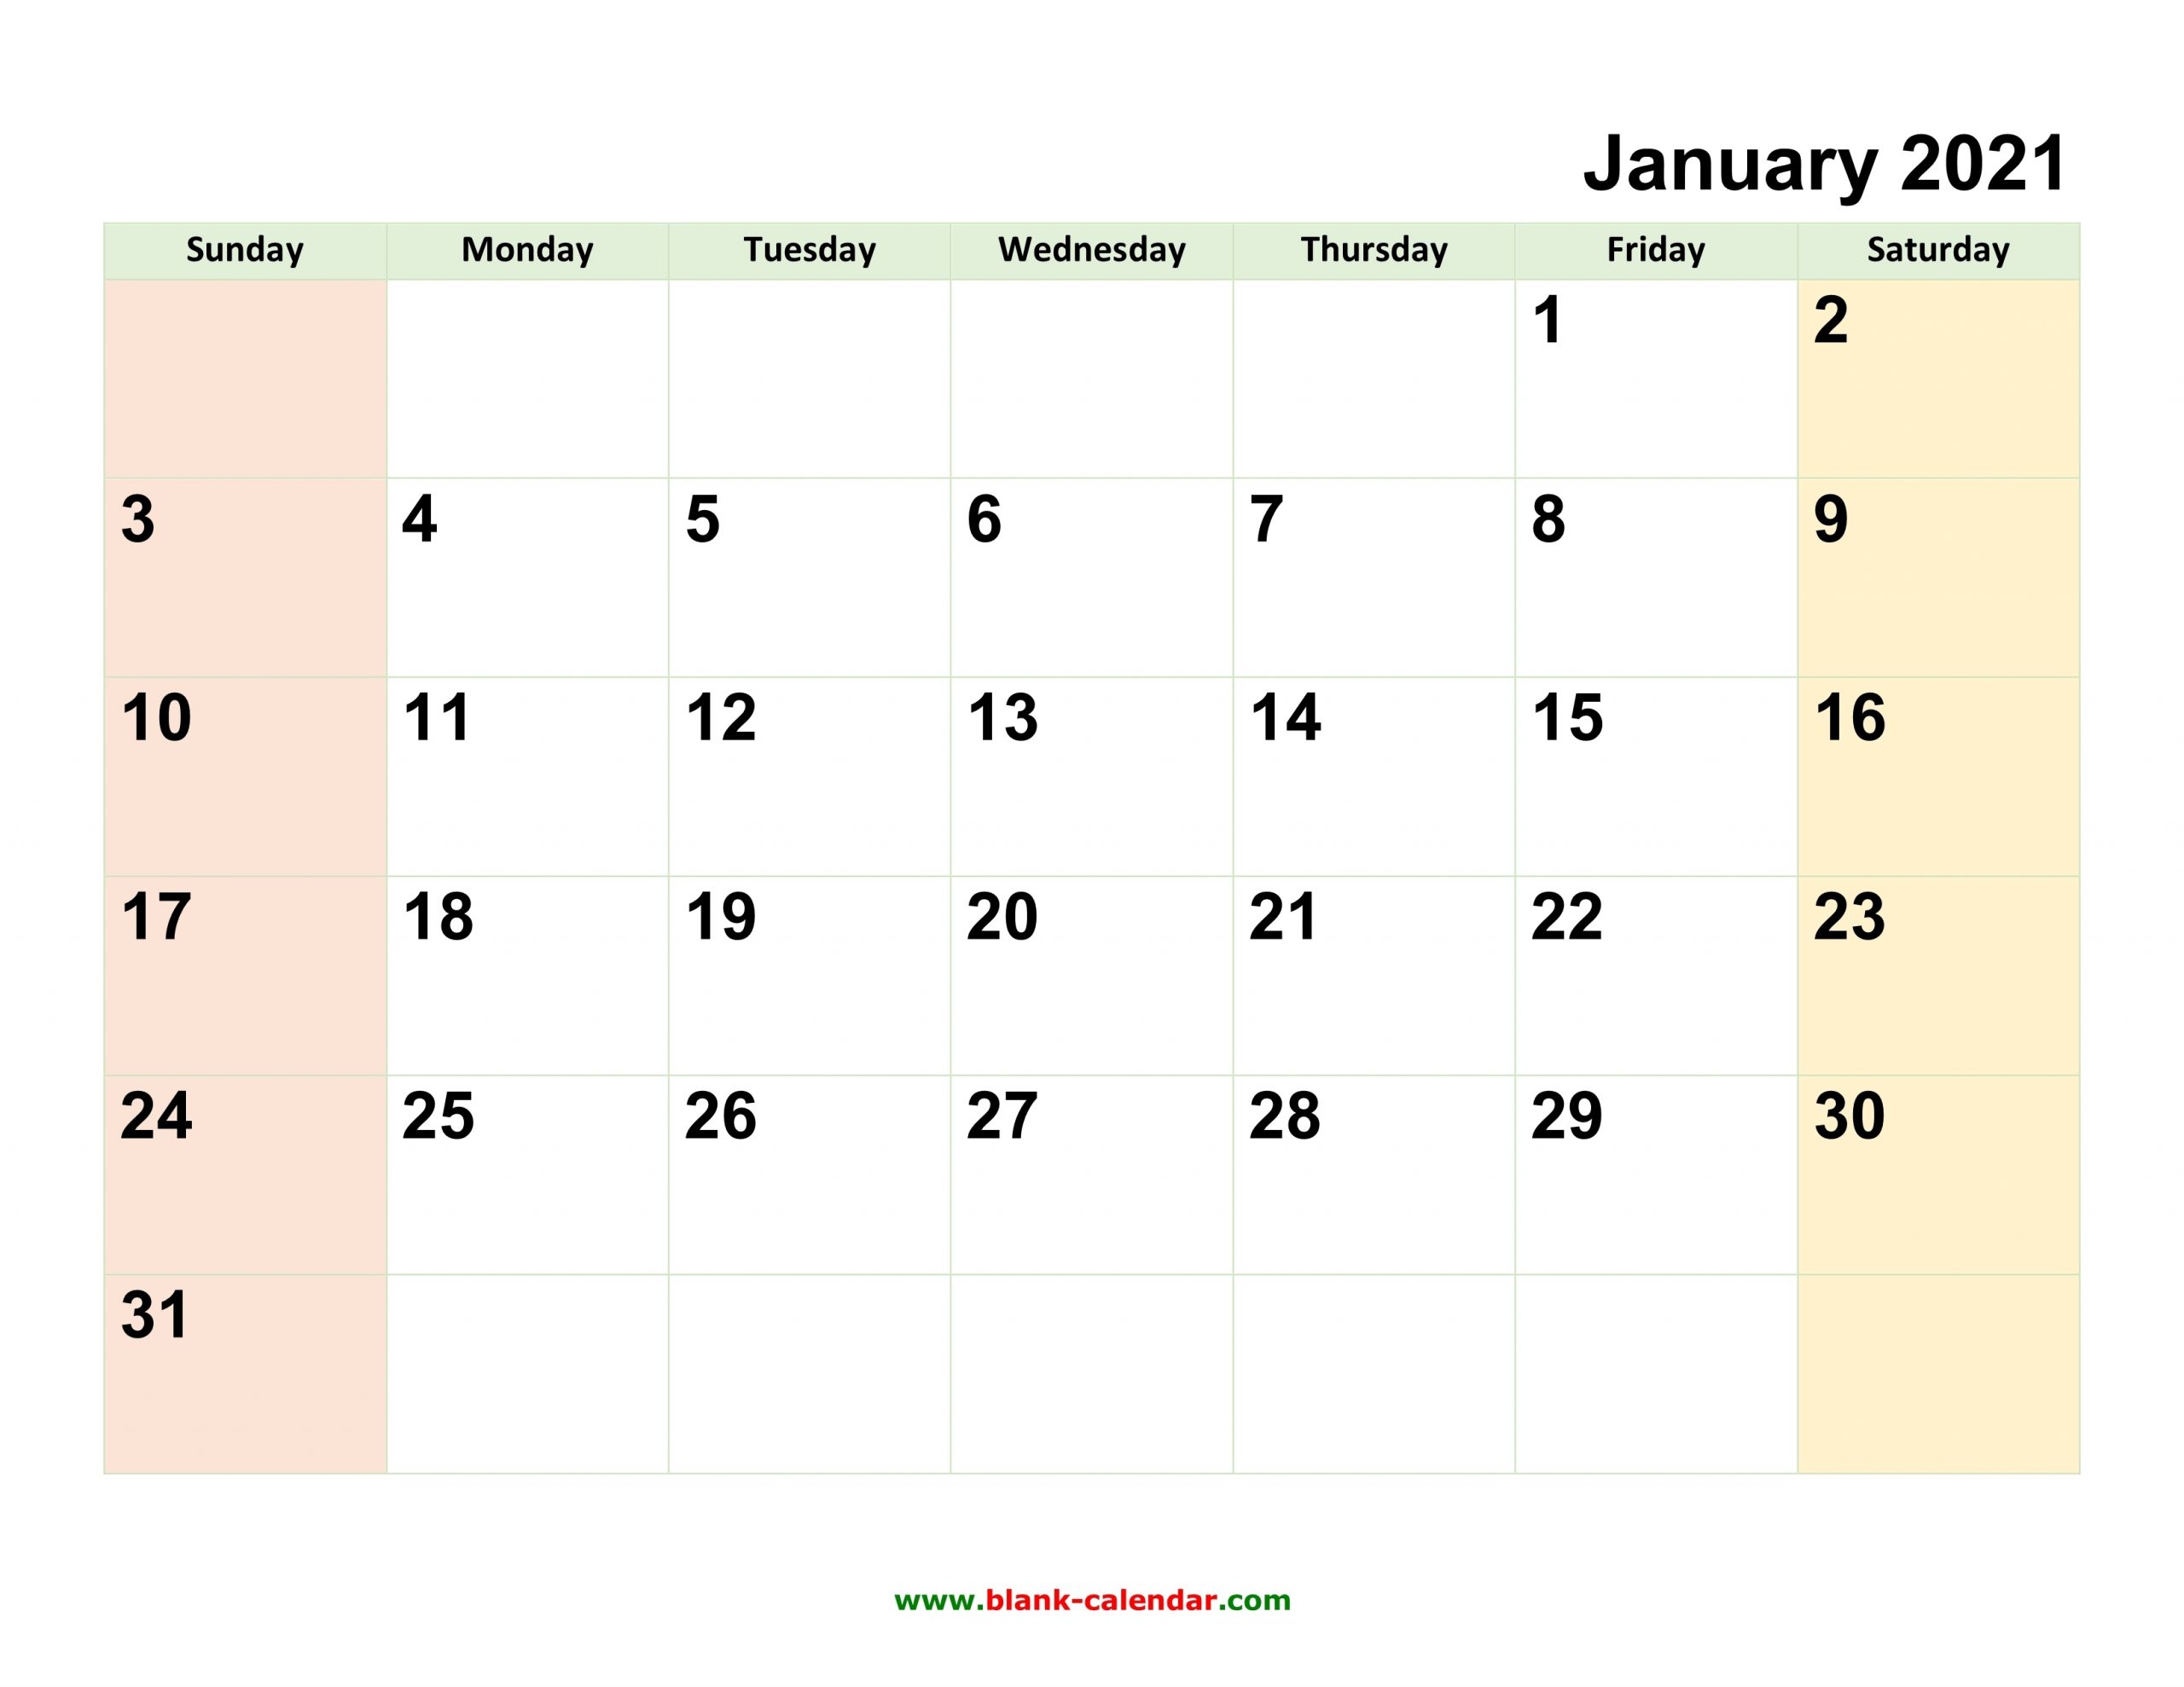 Take Google Calendar 2021 Printable